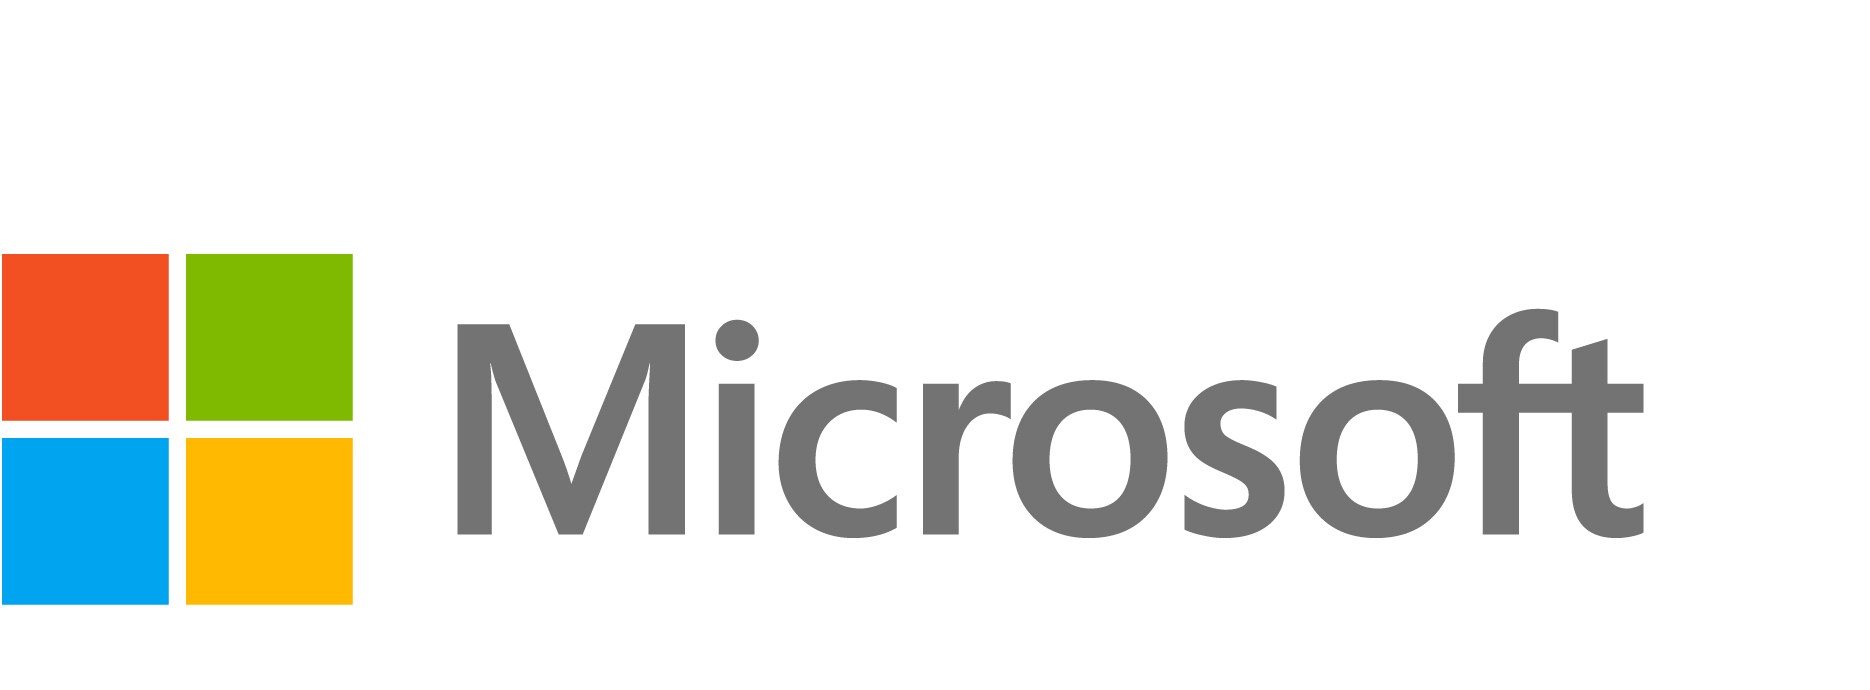 Microsoft Visual Studio Professional with MSDN - software assurance - 1 lic